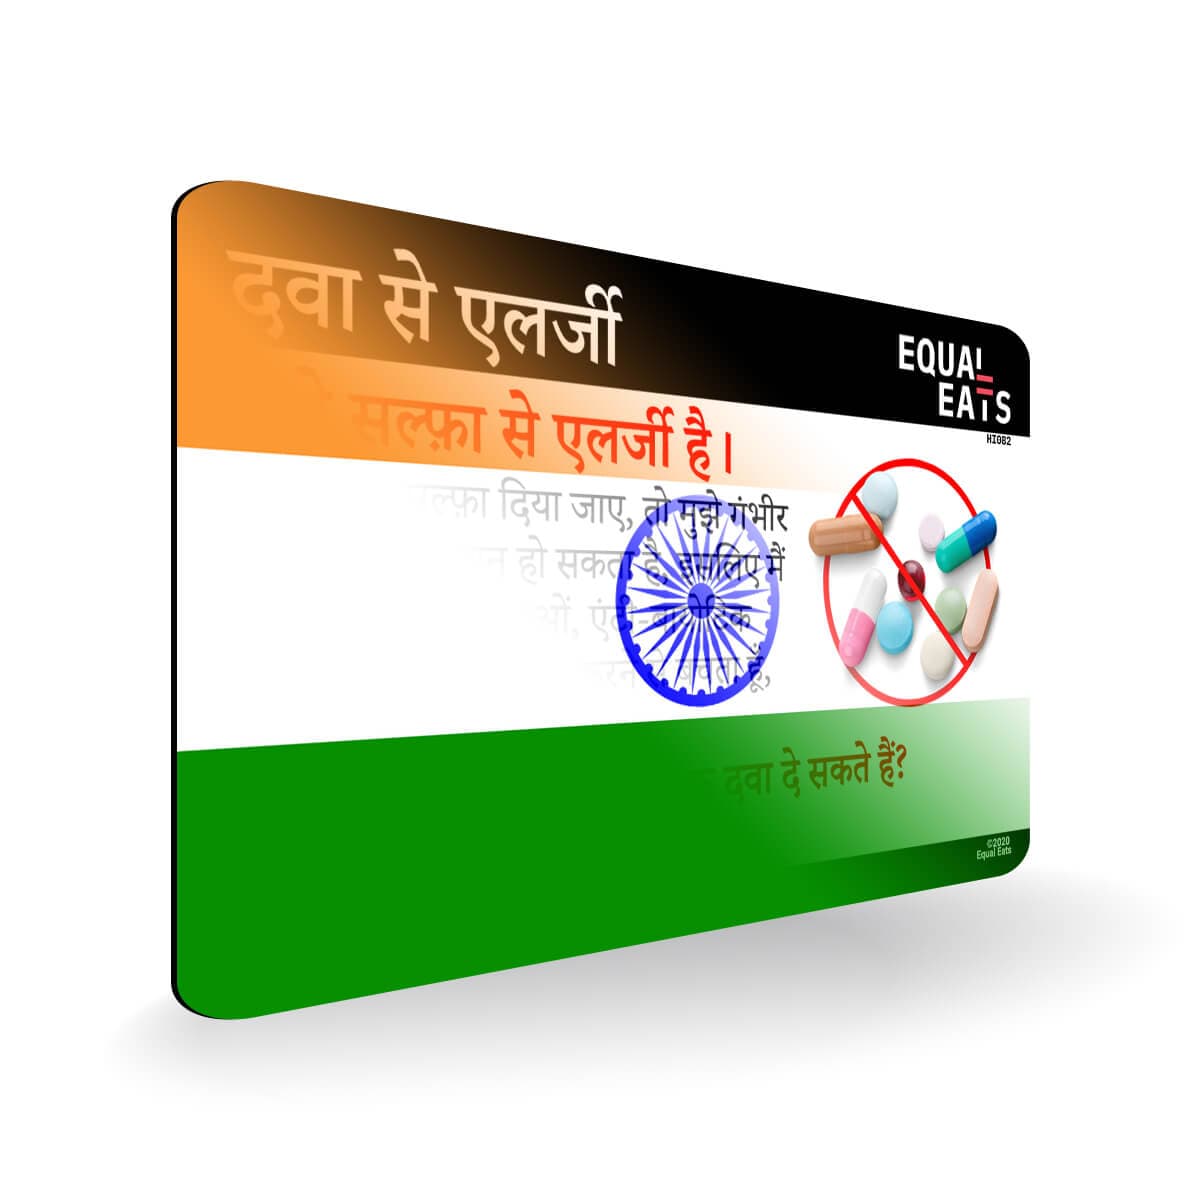 Sulfa Allergy in Hindi. Sulfa Medicine Allergy Card for India